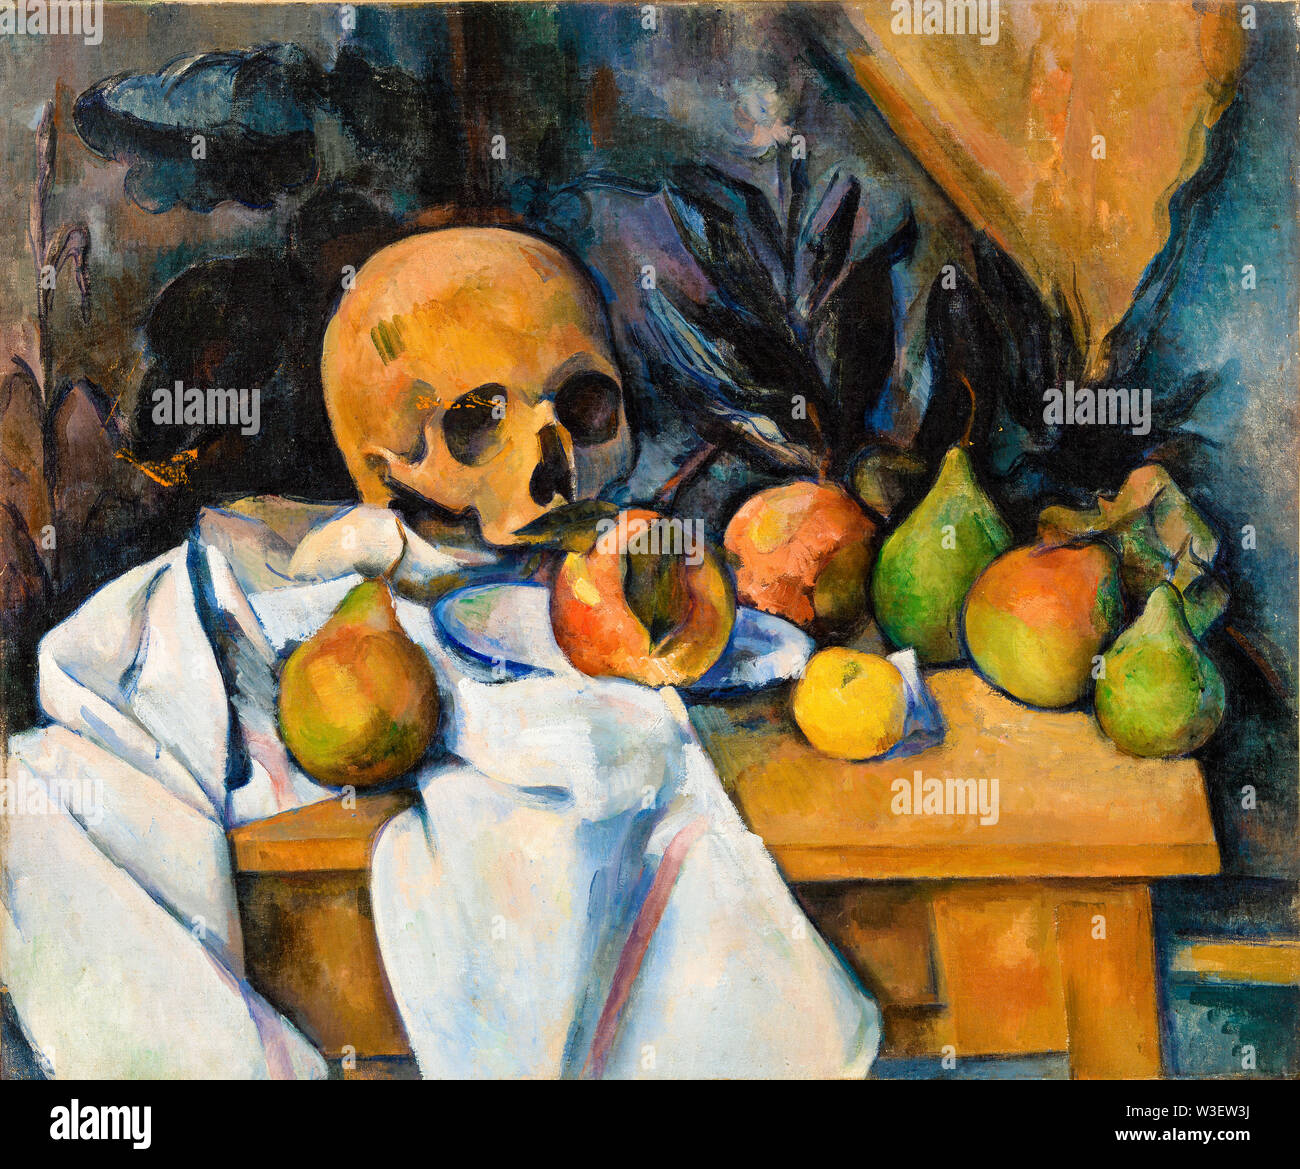 Paul Cézanne, Still life with Skull, still life painting, 1895-1900 Stock Photo